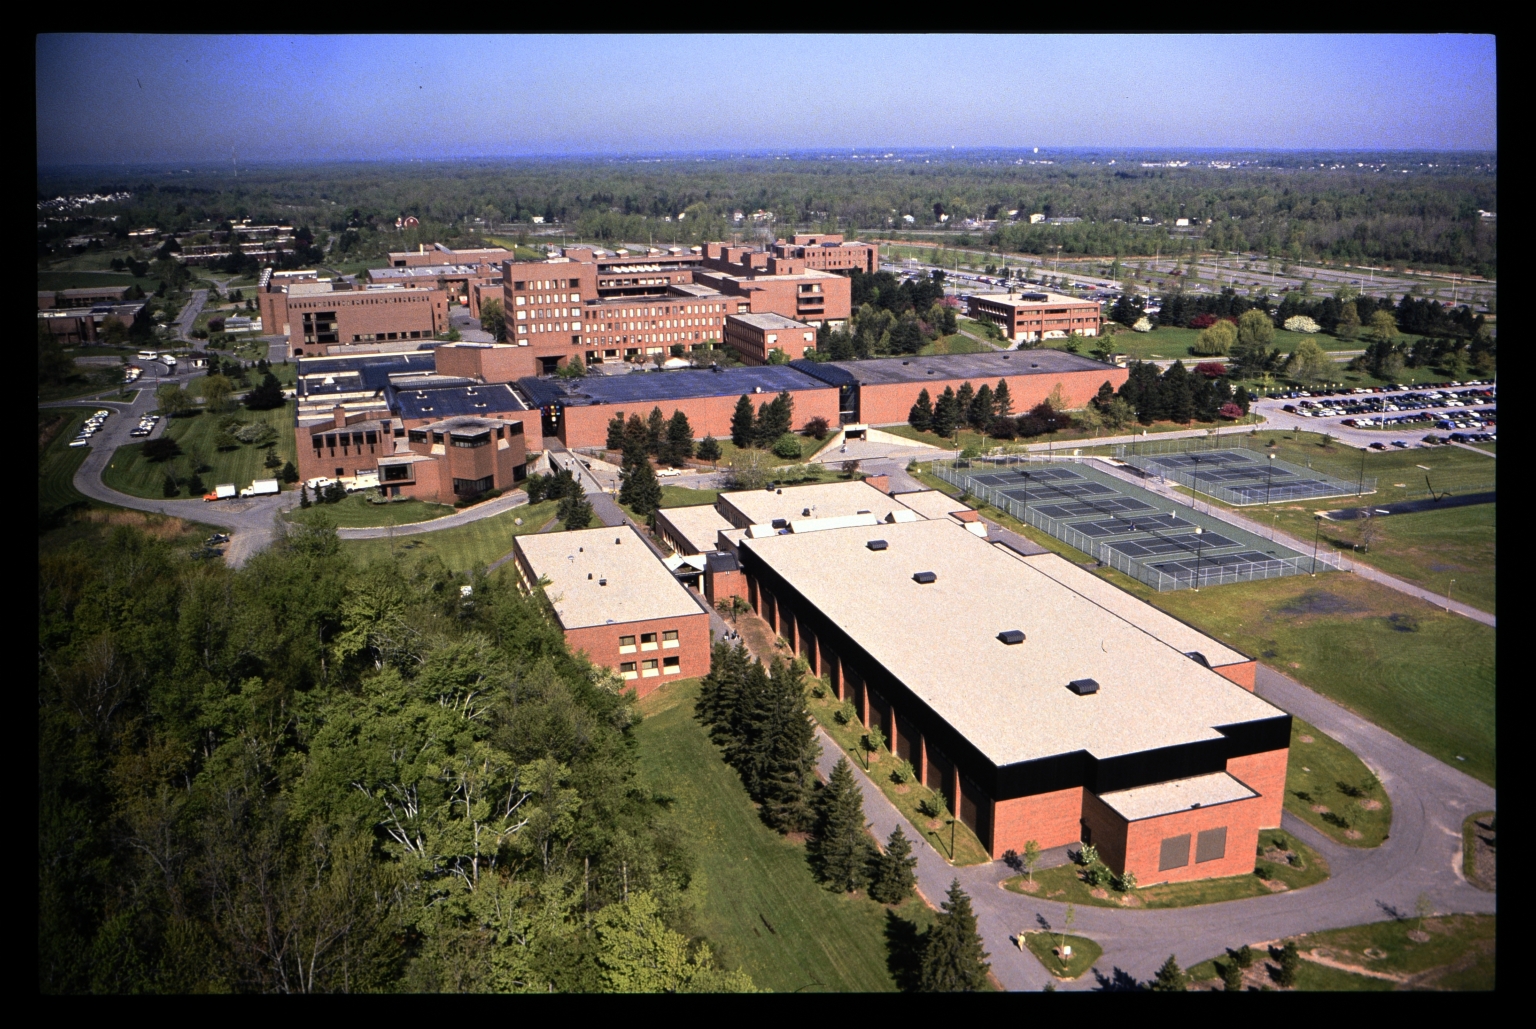 Aerial view of the Henrietta campus